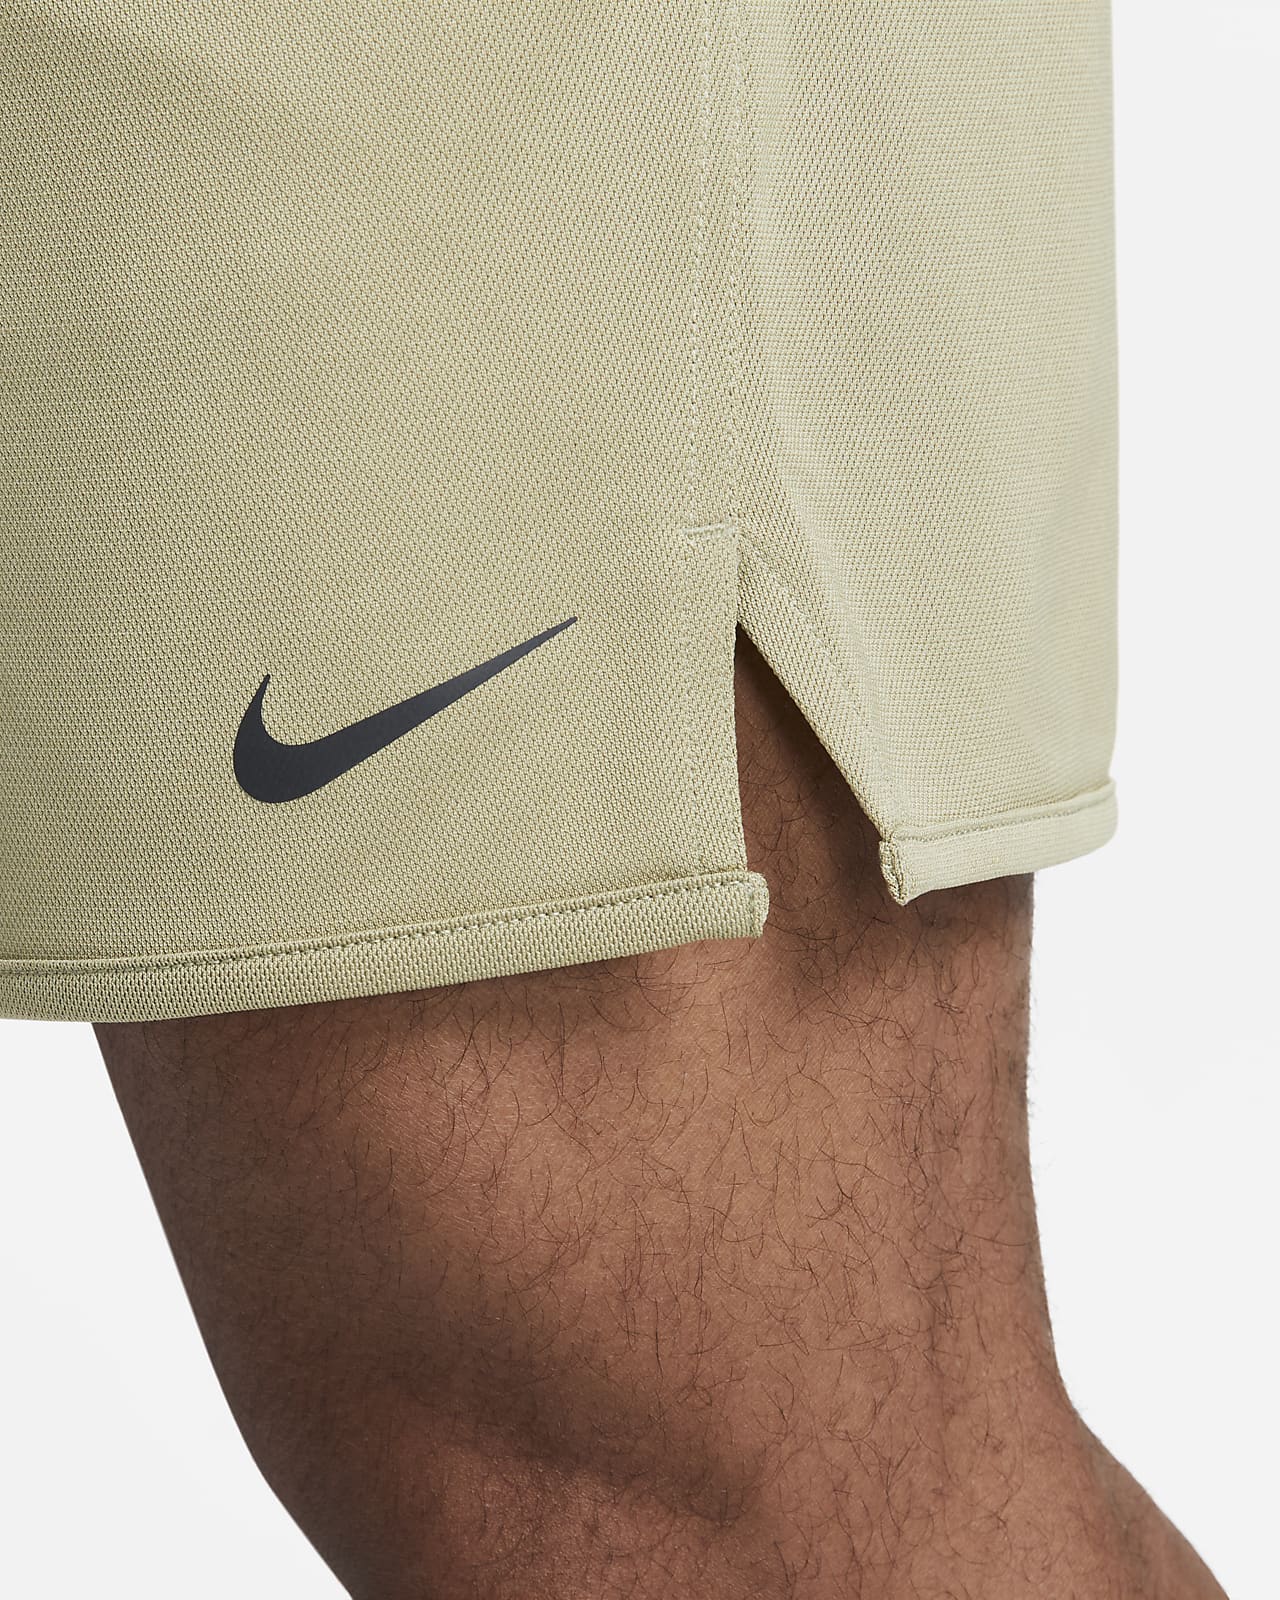 Mens Nike Dry Fit Sweat Pants in Teal sz XL SHORT 28" INSEAM | eBay